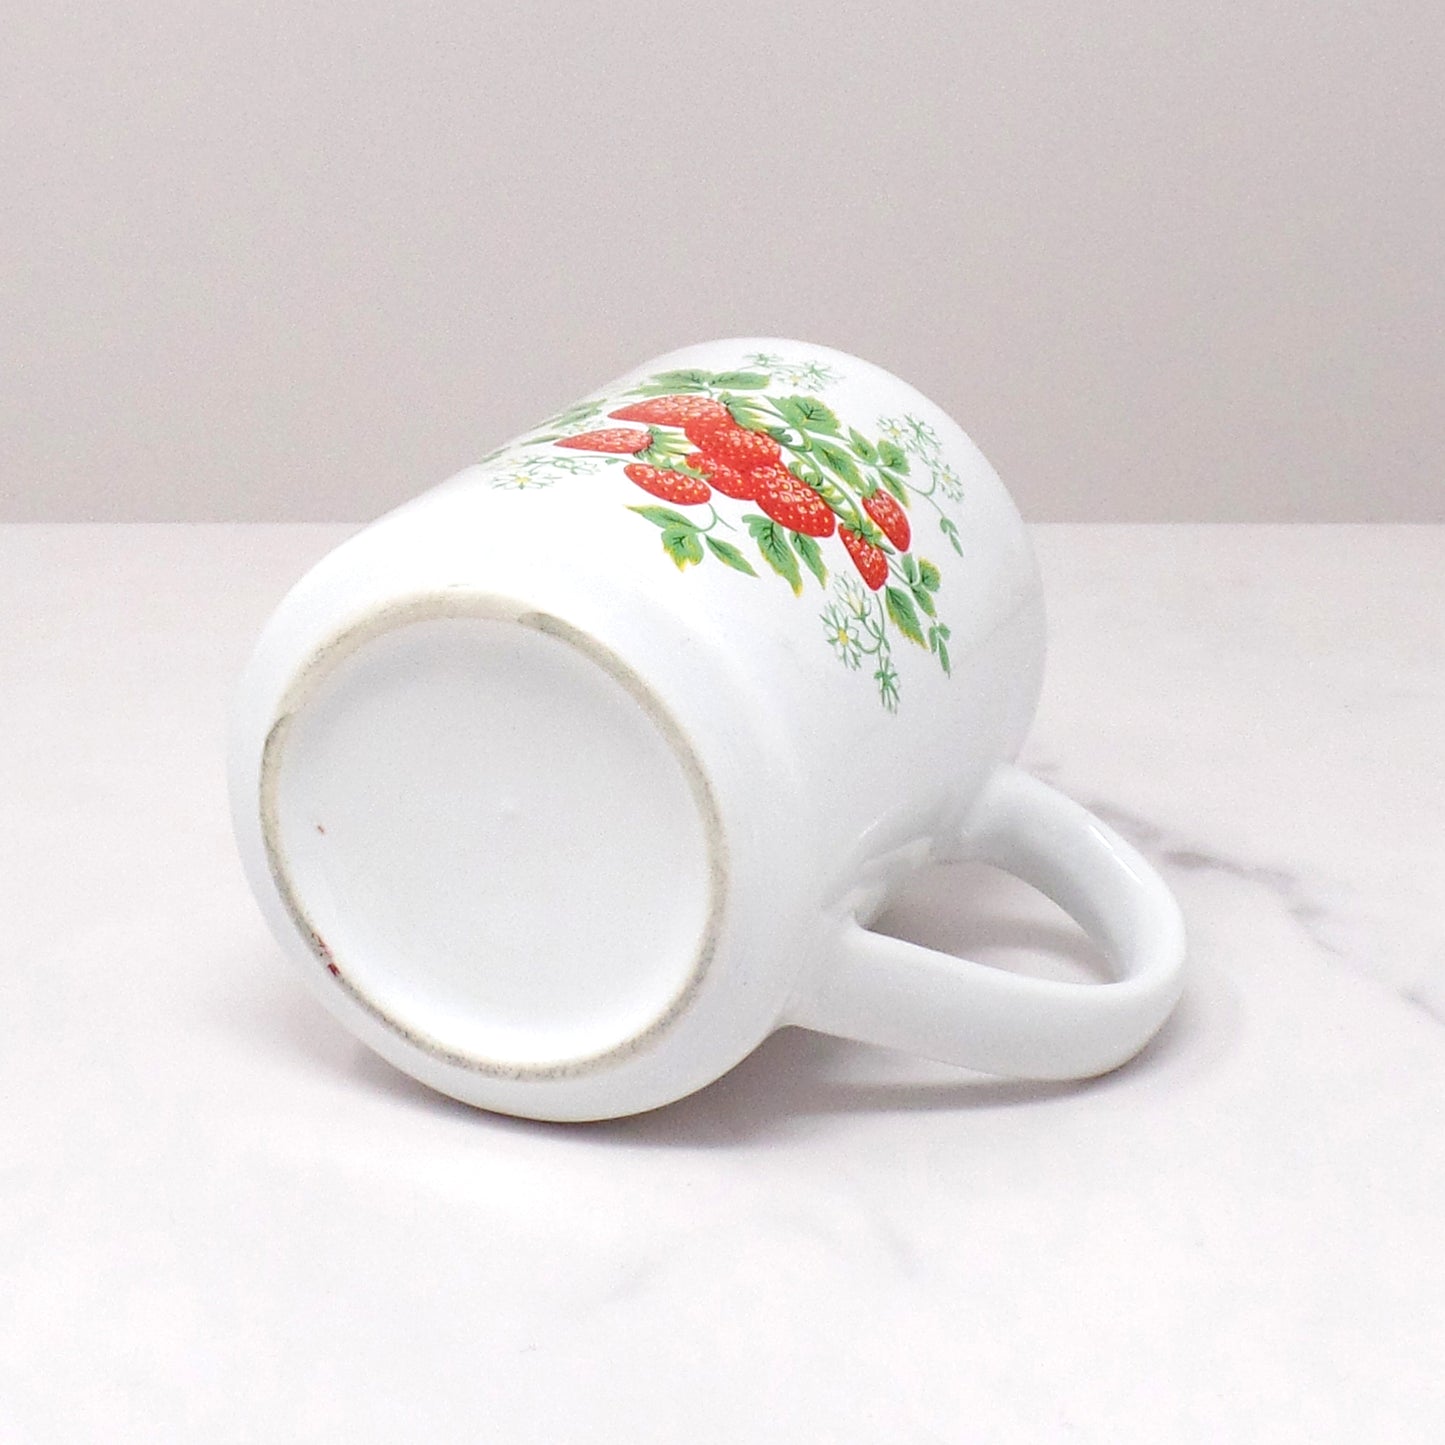 Vintage White Ceramic Strawberry Mug, 8 oz (1980s)